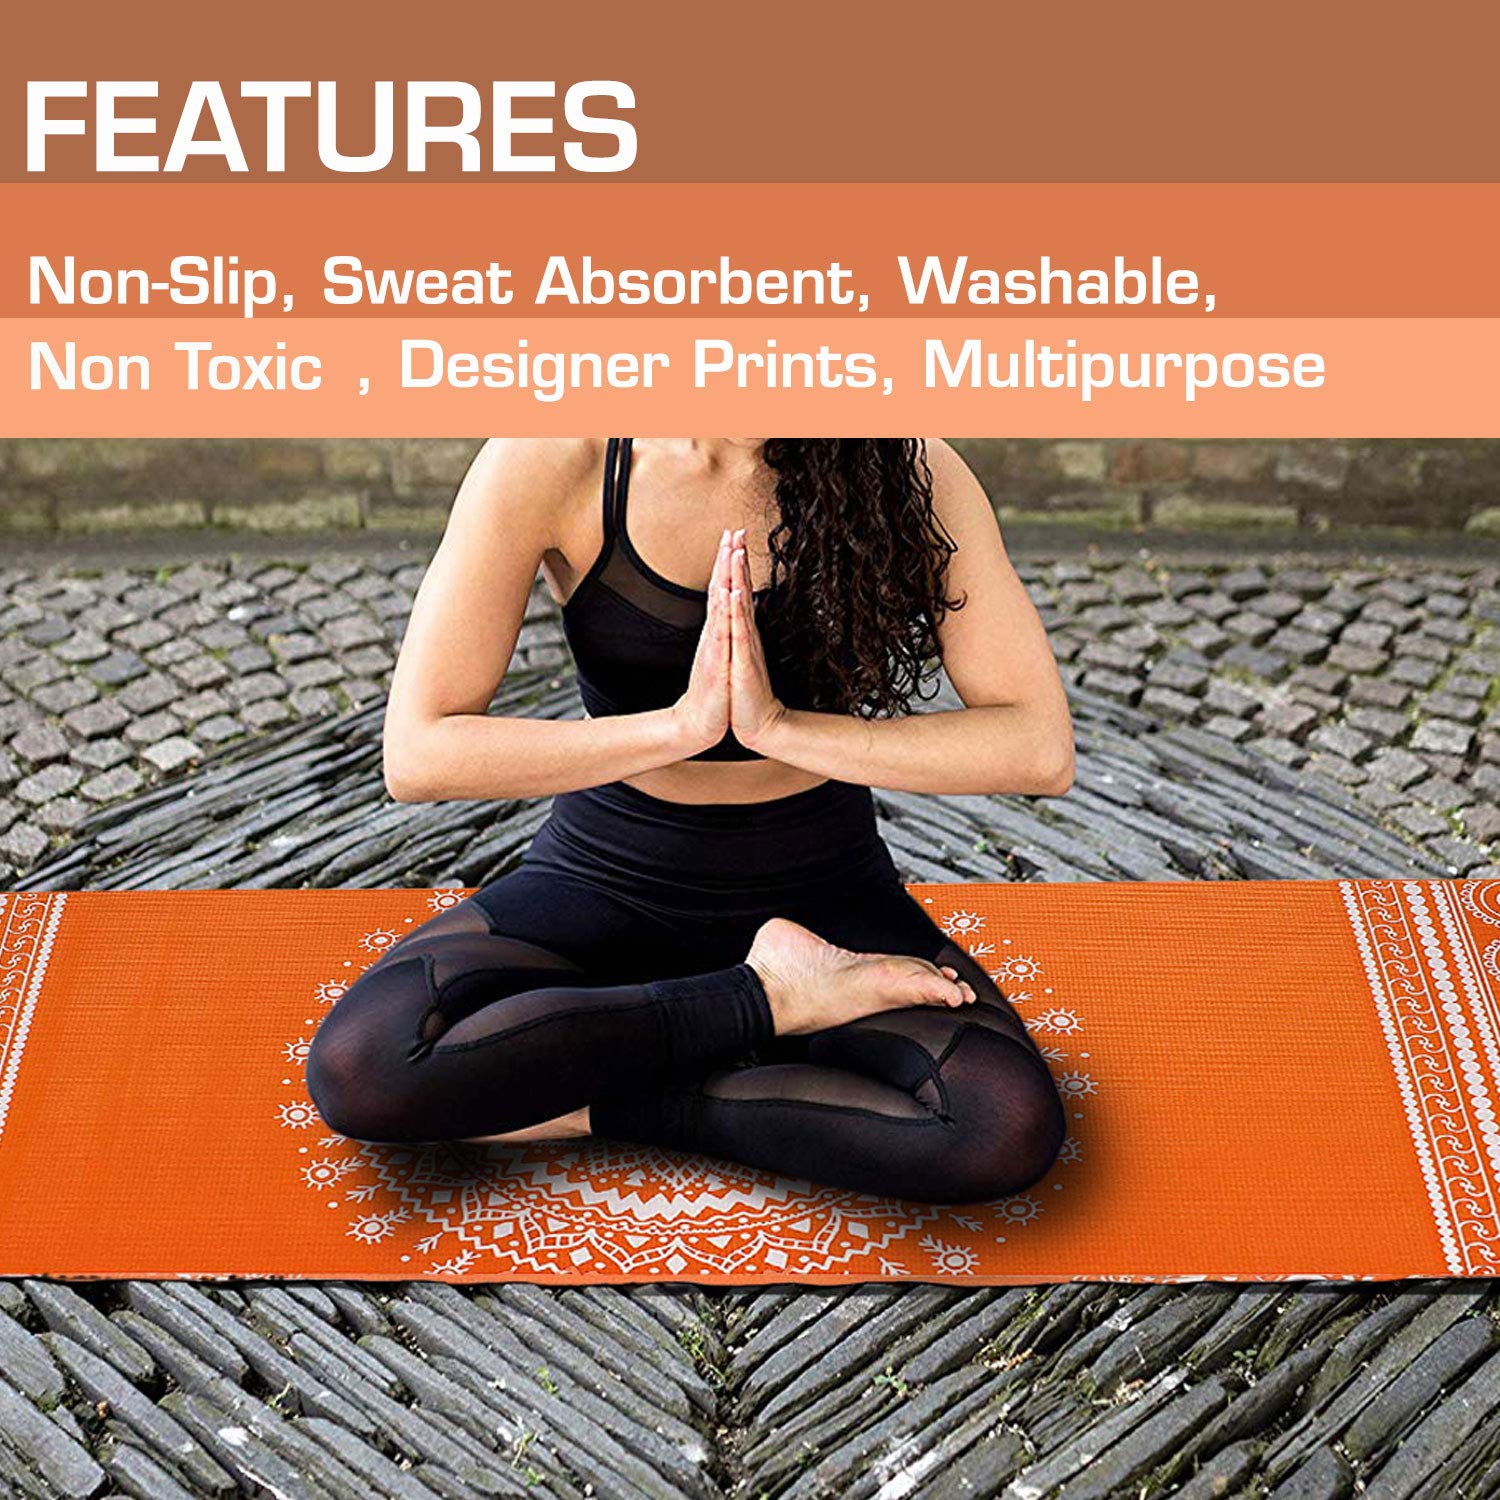 Strauss Meditation Designer Yoga Mat 5 mm (Orange), Yoga Block (Orange) Pair, Anti-Slip Yoga Towel (Blue) and Yoga Belt (Orange)